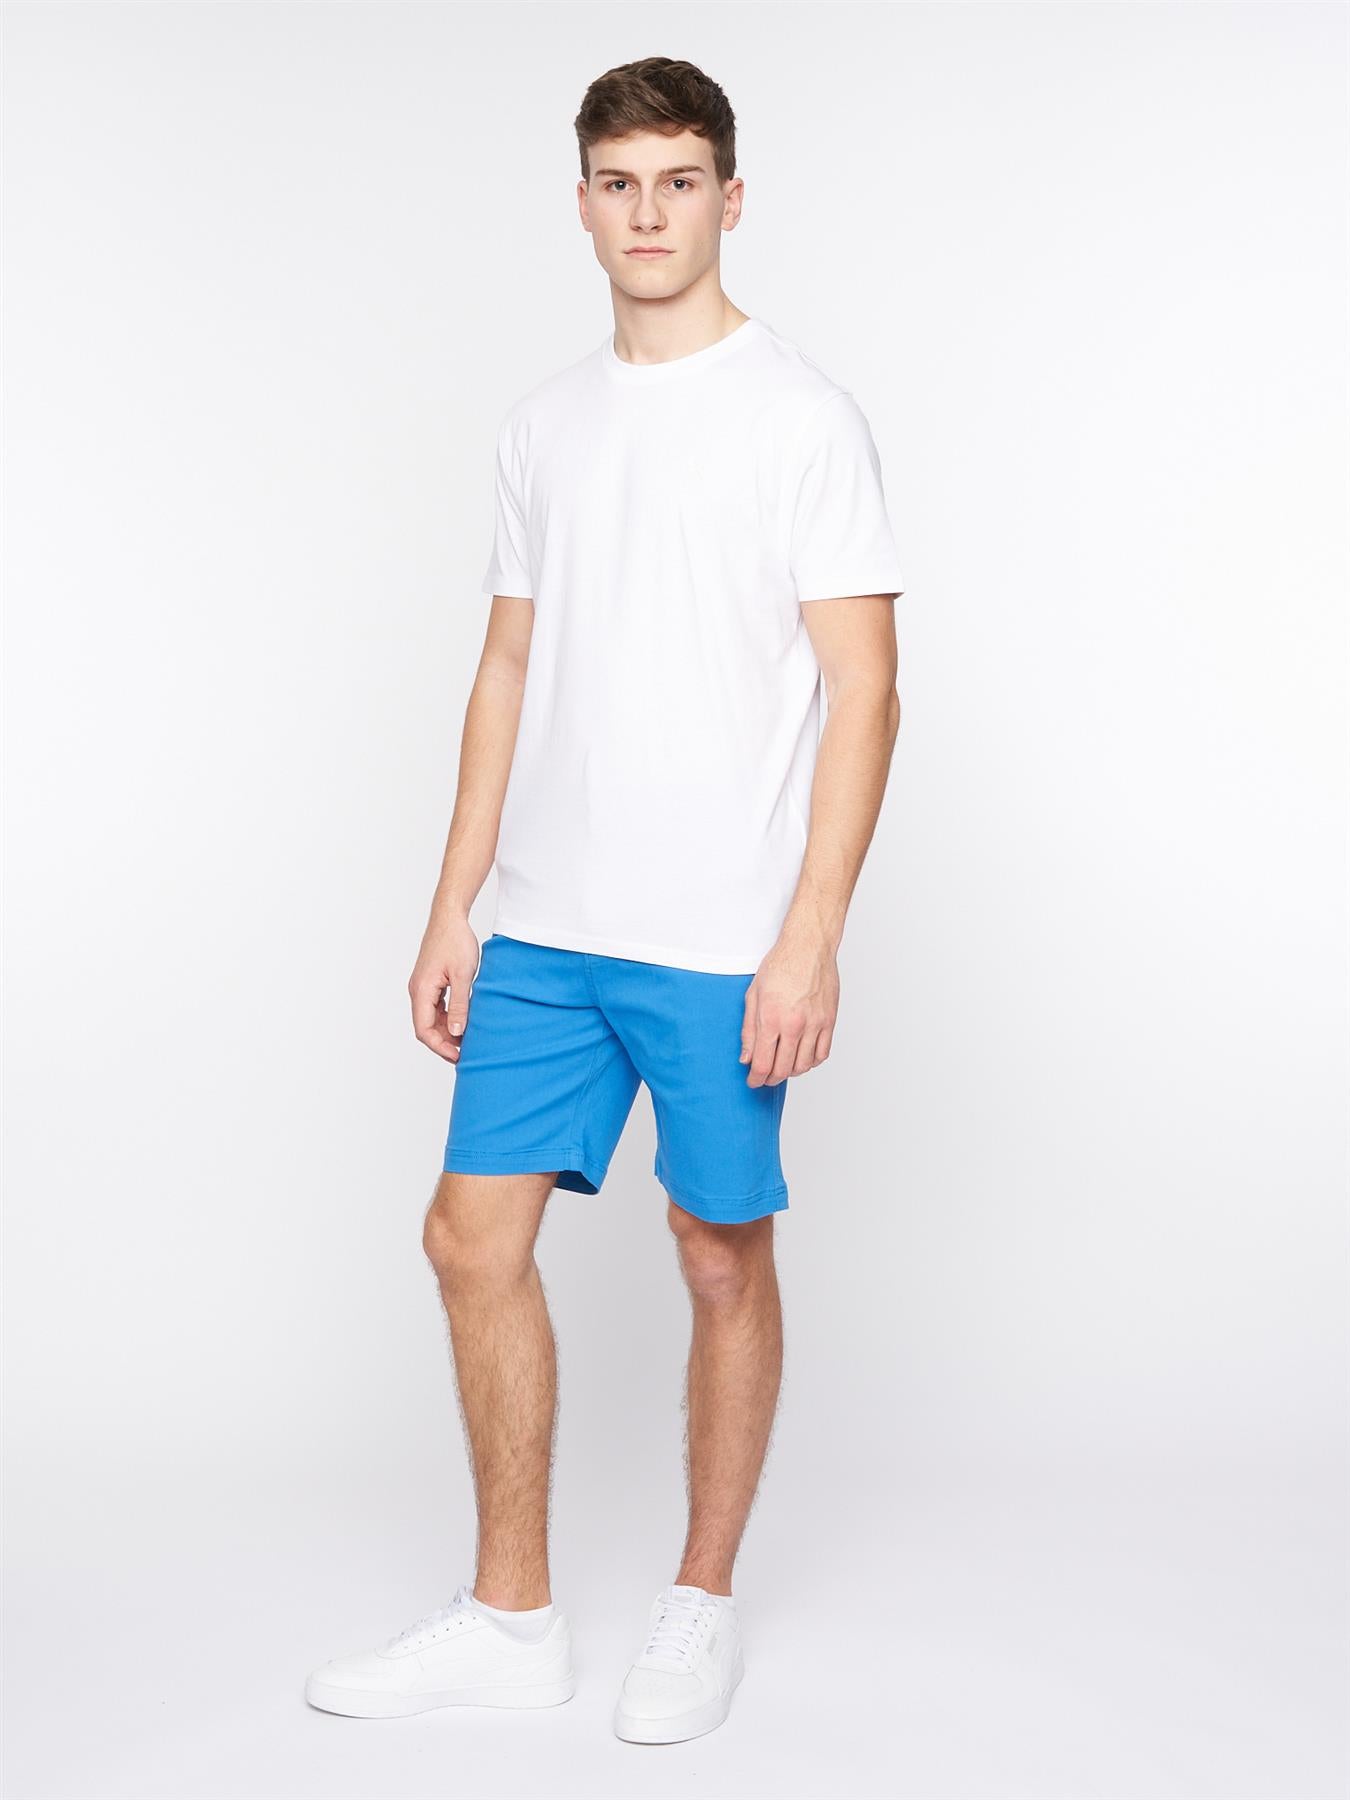 Marvis Shorts Bright Blue